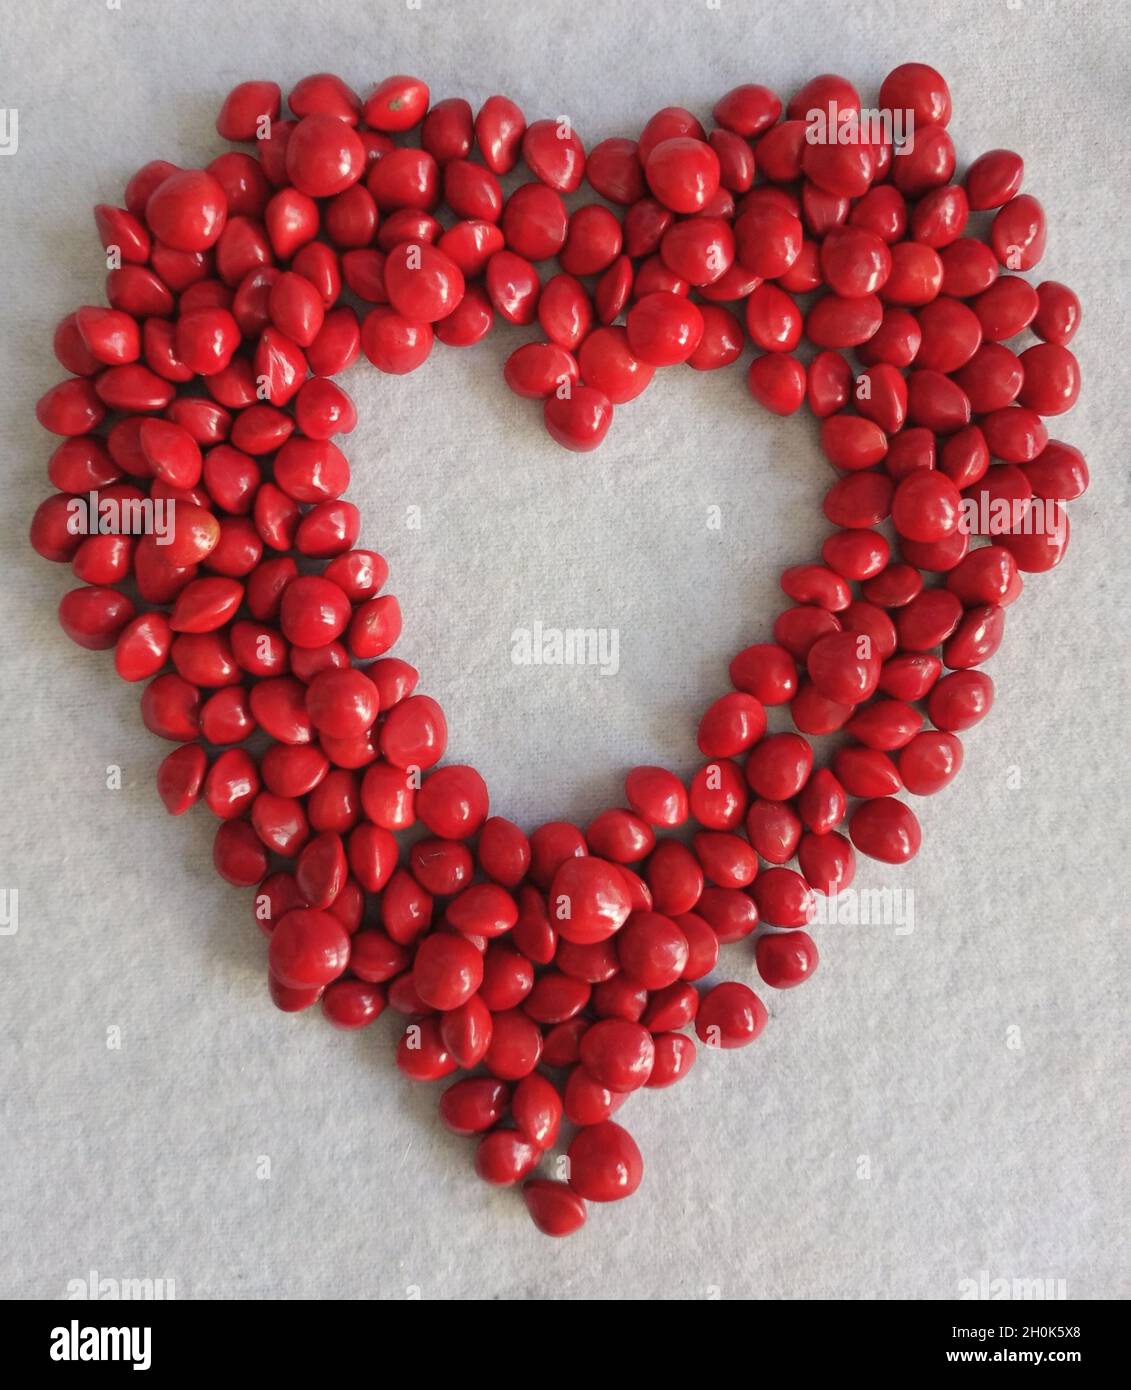 red heart shape saga seeds background border Stock Photo